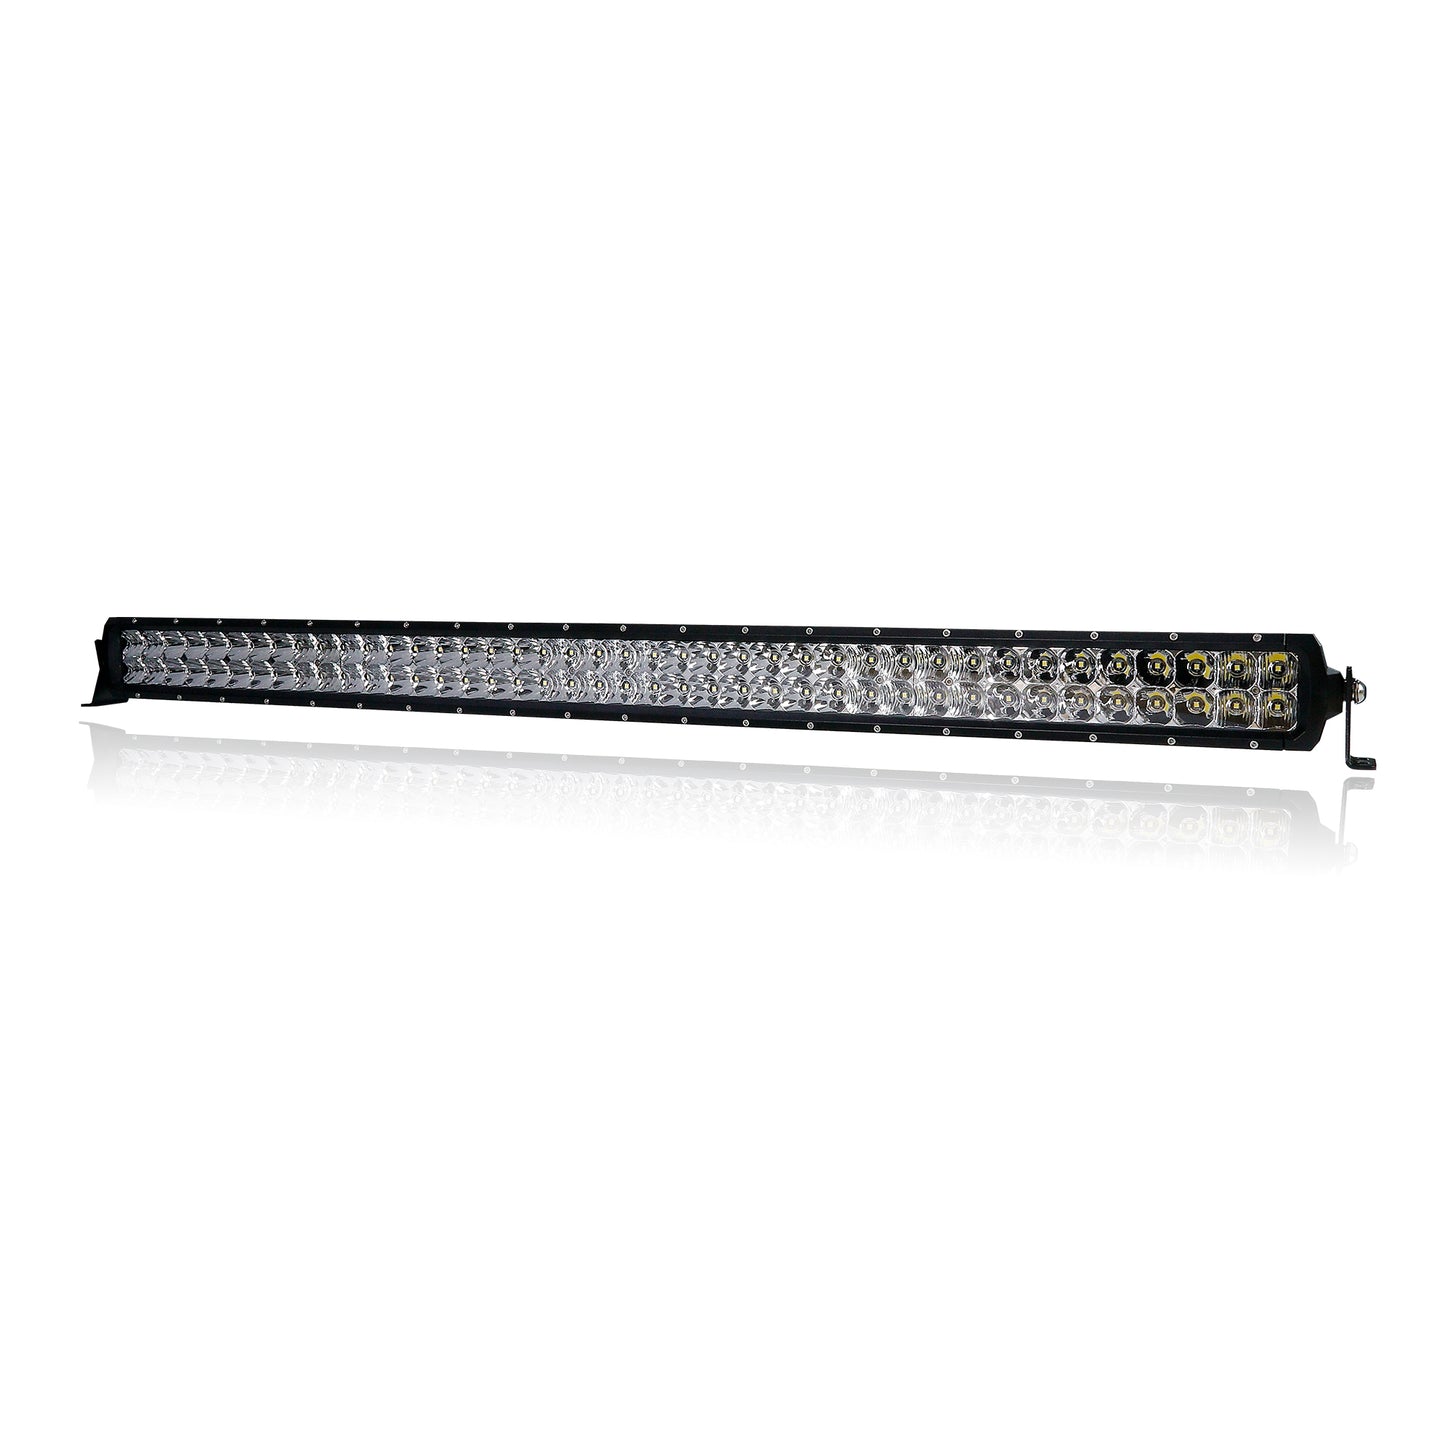 40" Curved LED Light Bar - Combo beam